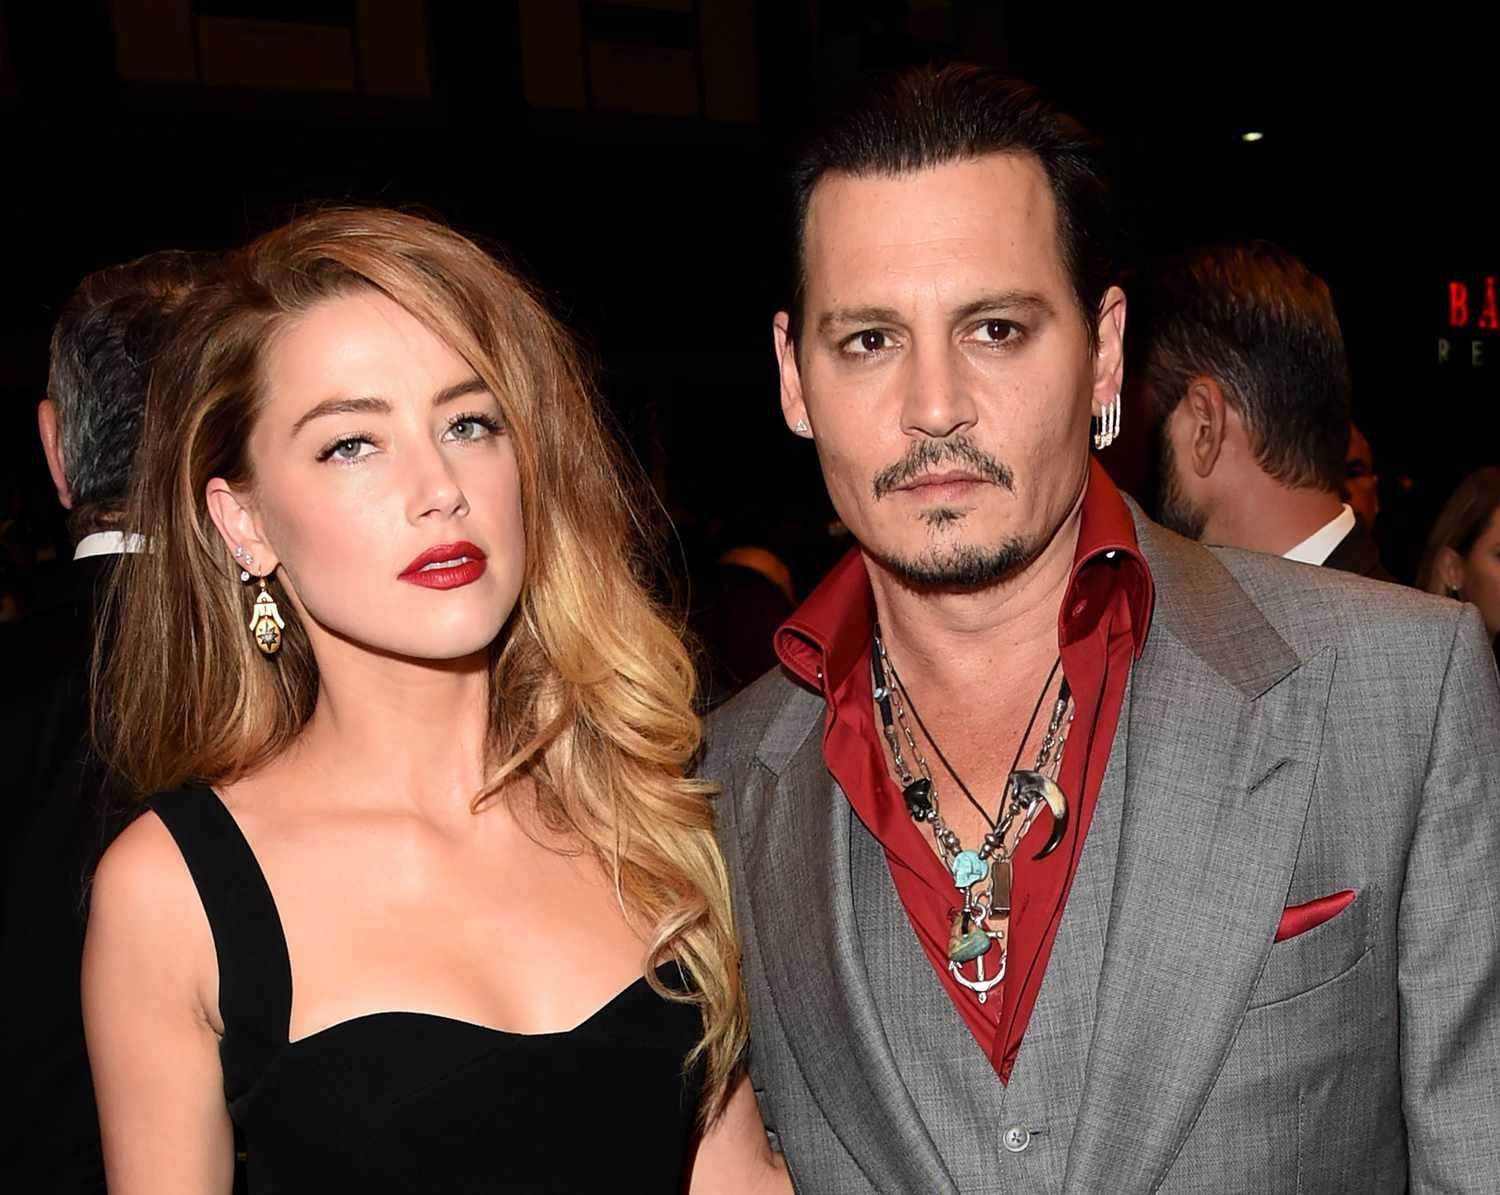 Johnny Depp's instagram revelation: A glimpse into post-trial emotions